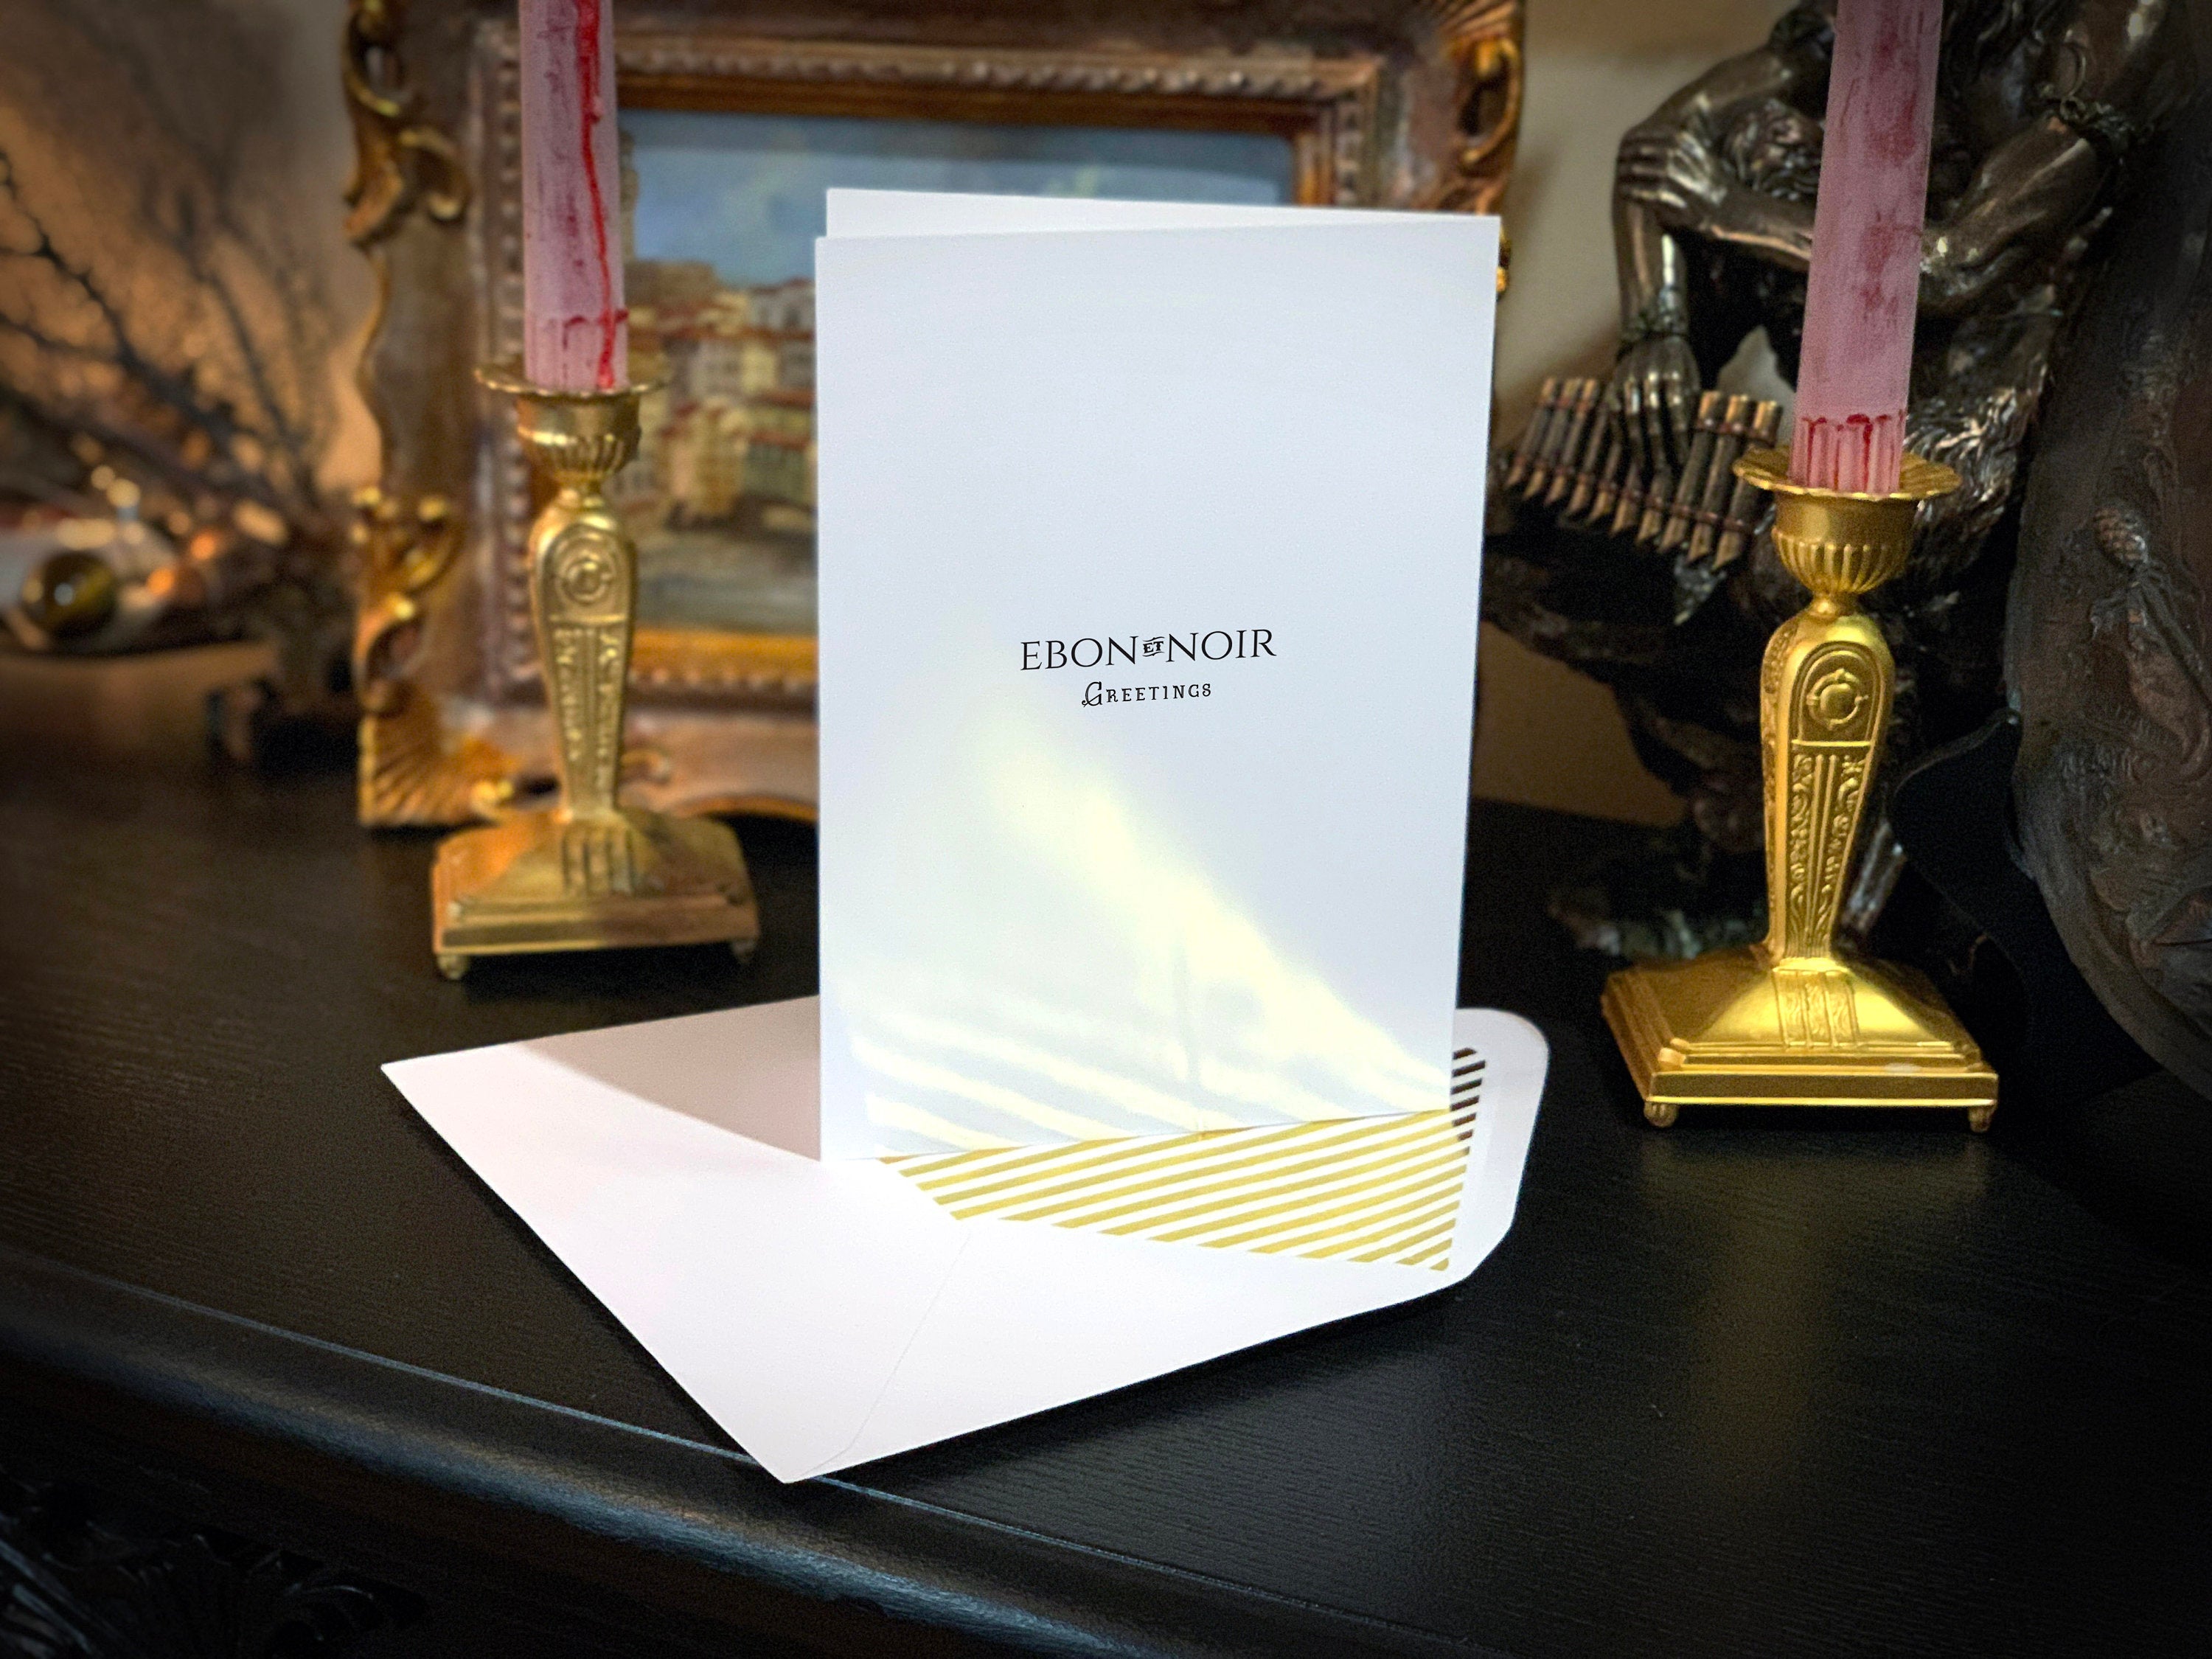 Masqueraders by Raimundo De Madrazo Y Garreta, Valentine's Day Greeting Card with Gold Foil Envelope, 1 Card/Envelope